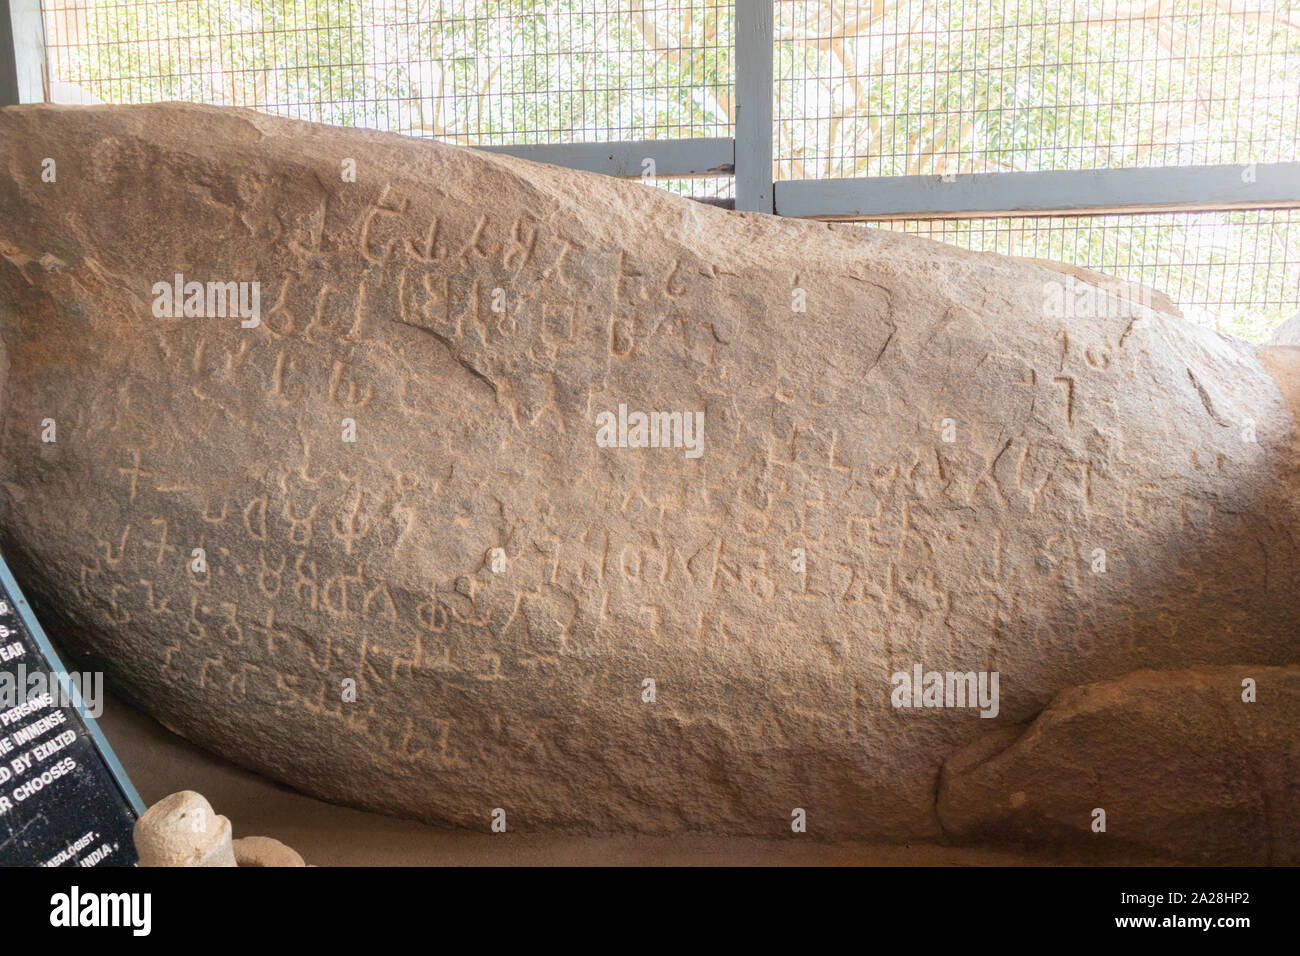 Rock edict of Emperor Ashoka on rock boulder at Maski, Raichur, India Stock Photo